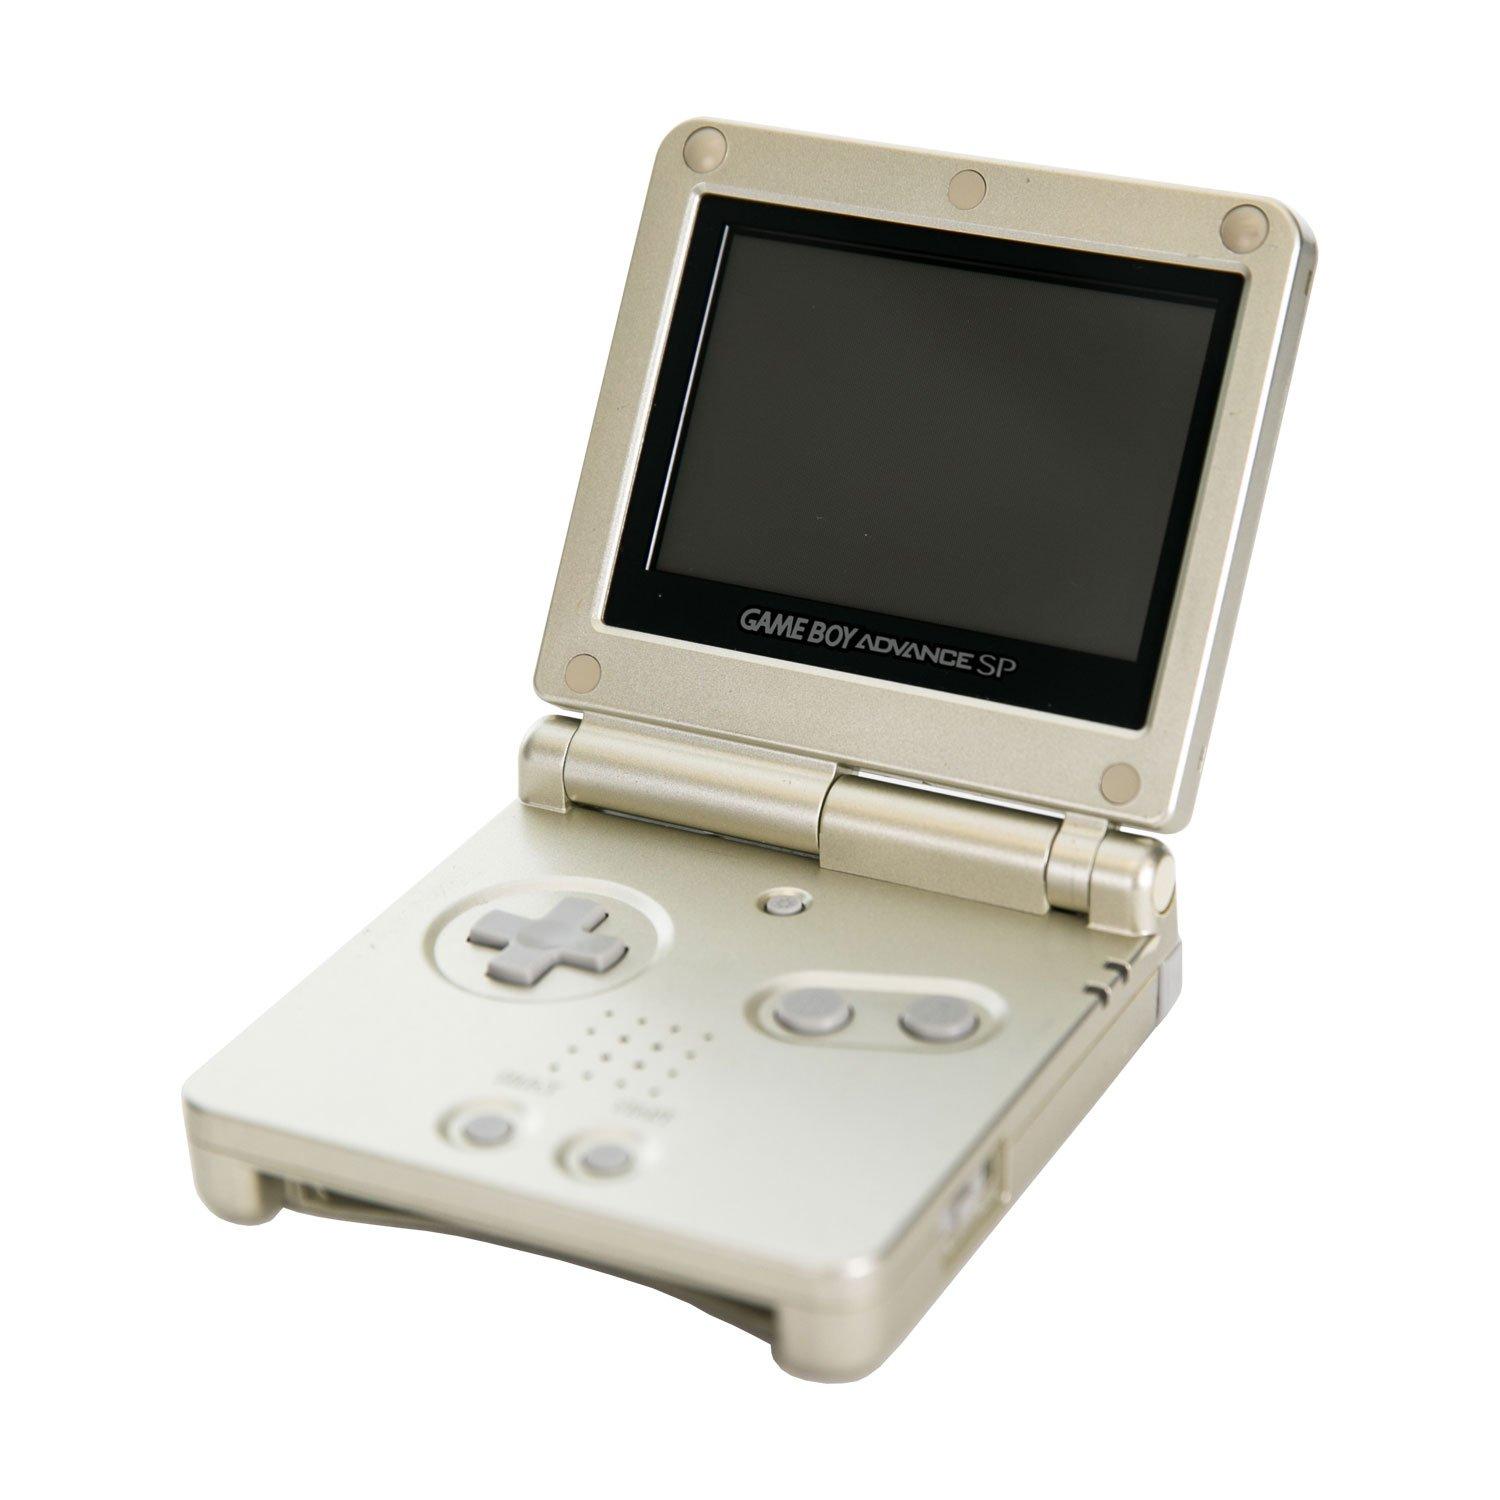 Nintendo Game Boy Advance SP with ACPurple | GameStop